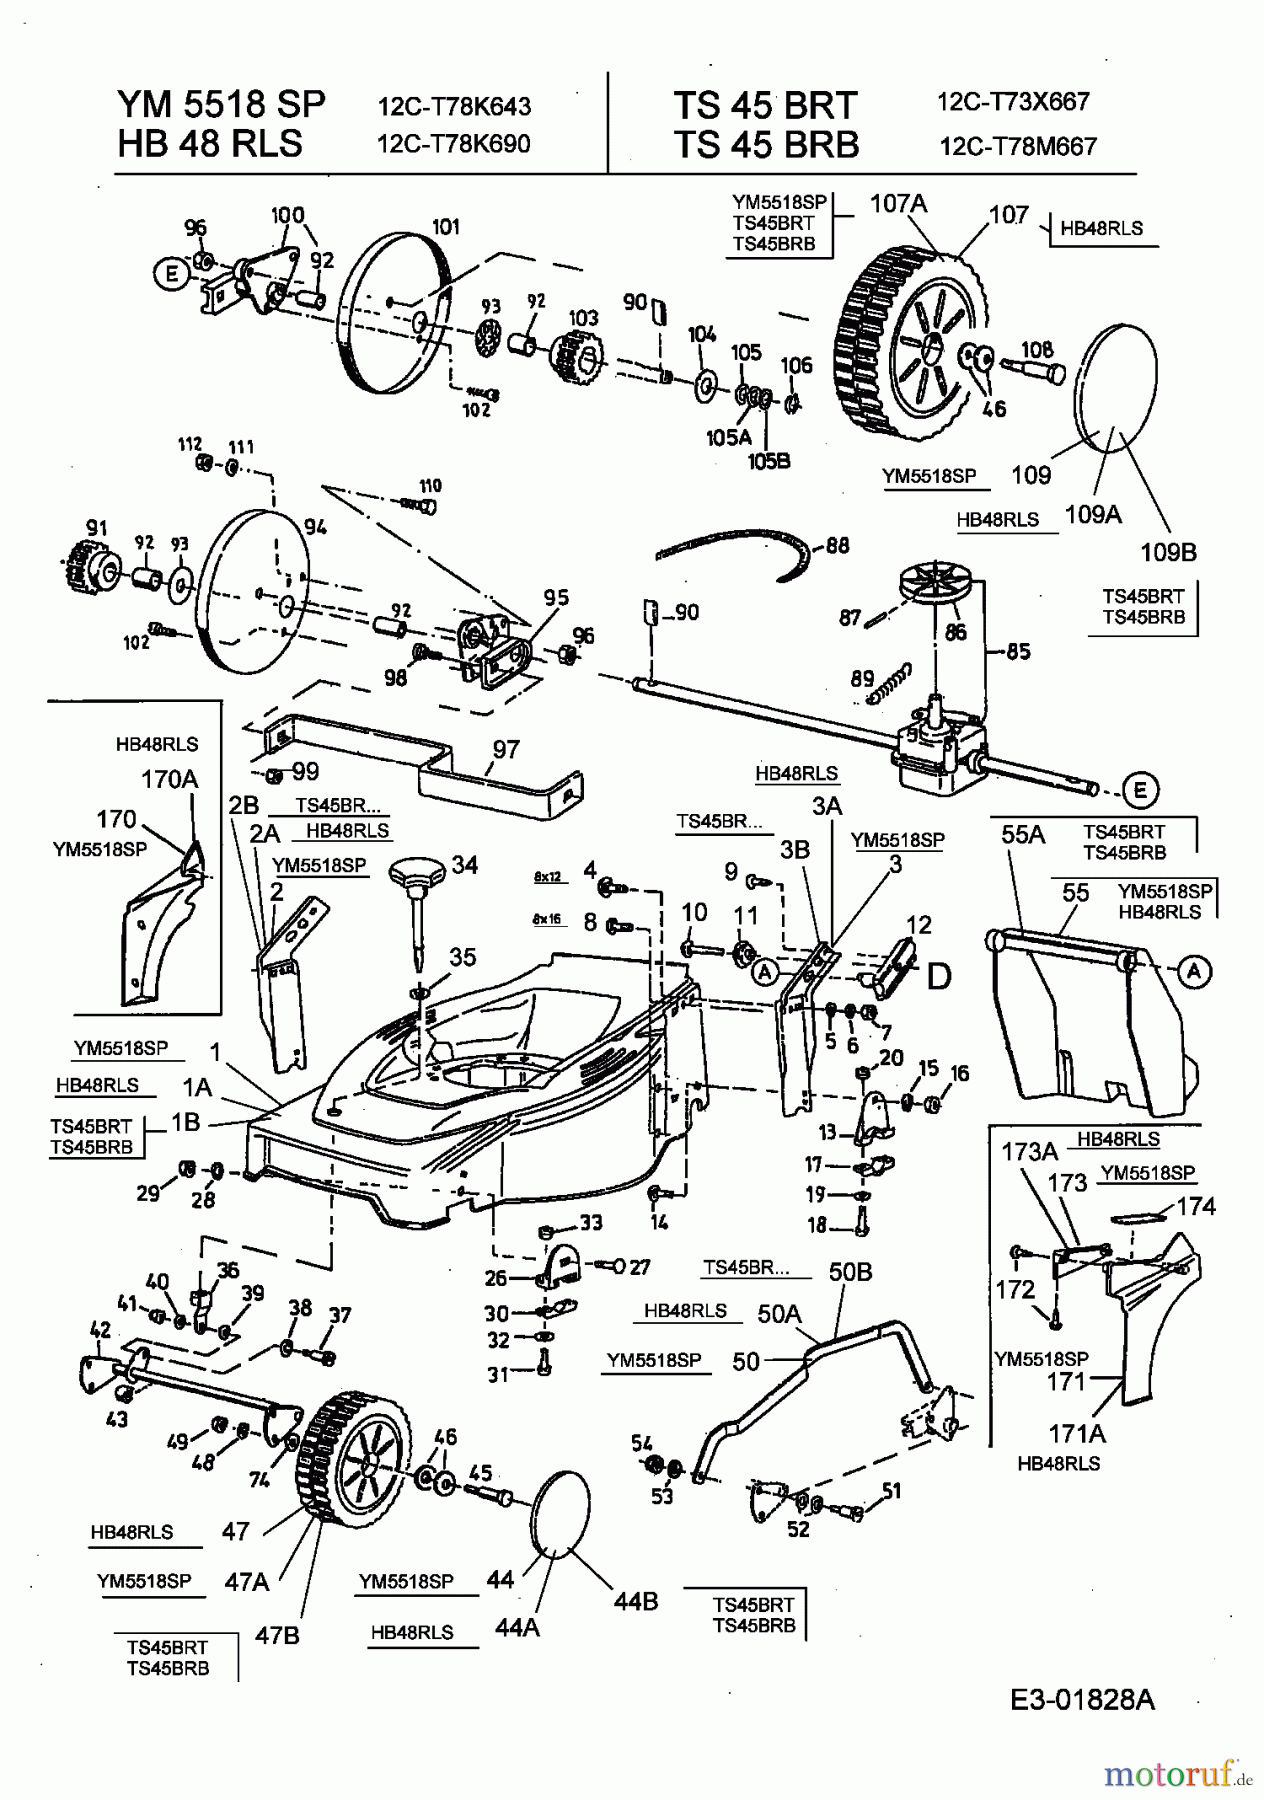  Turbo Silent Petrol mower self propelled TS 45 BR-T 12C-T73X667  (2003) Gearbox, Wheels, Cutting hight adjustment